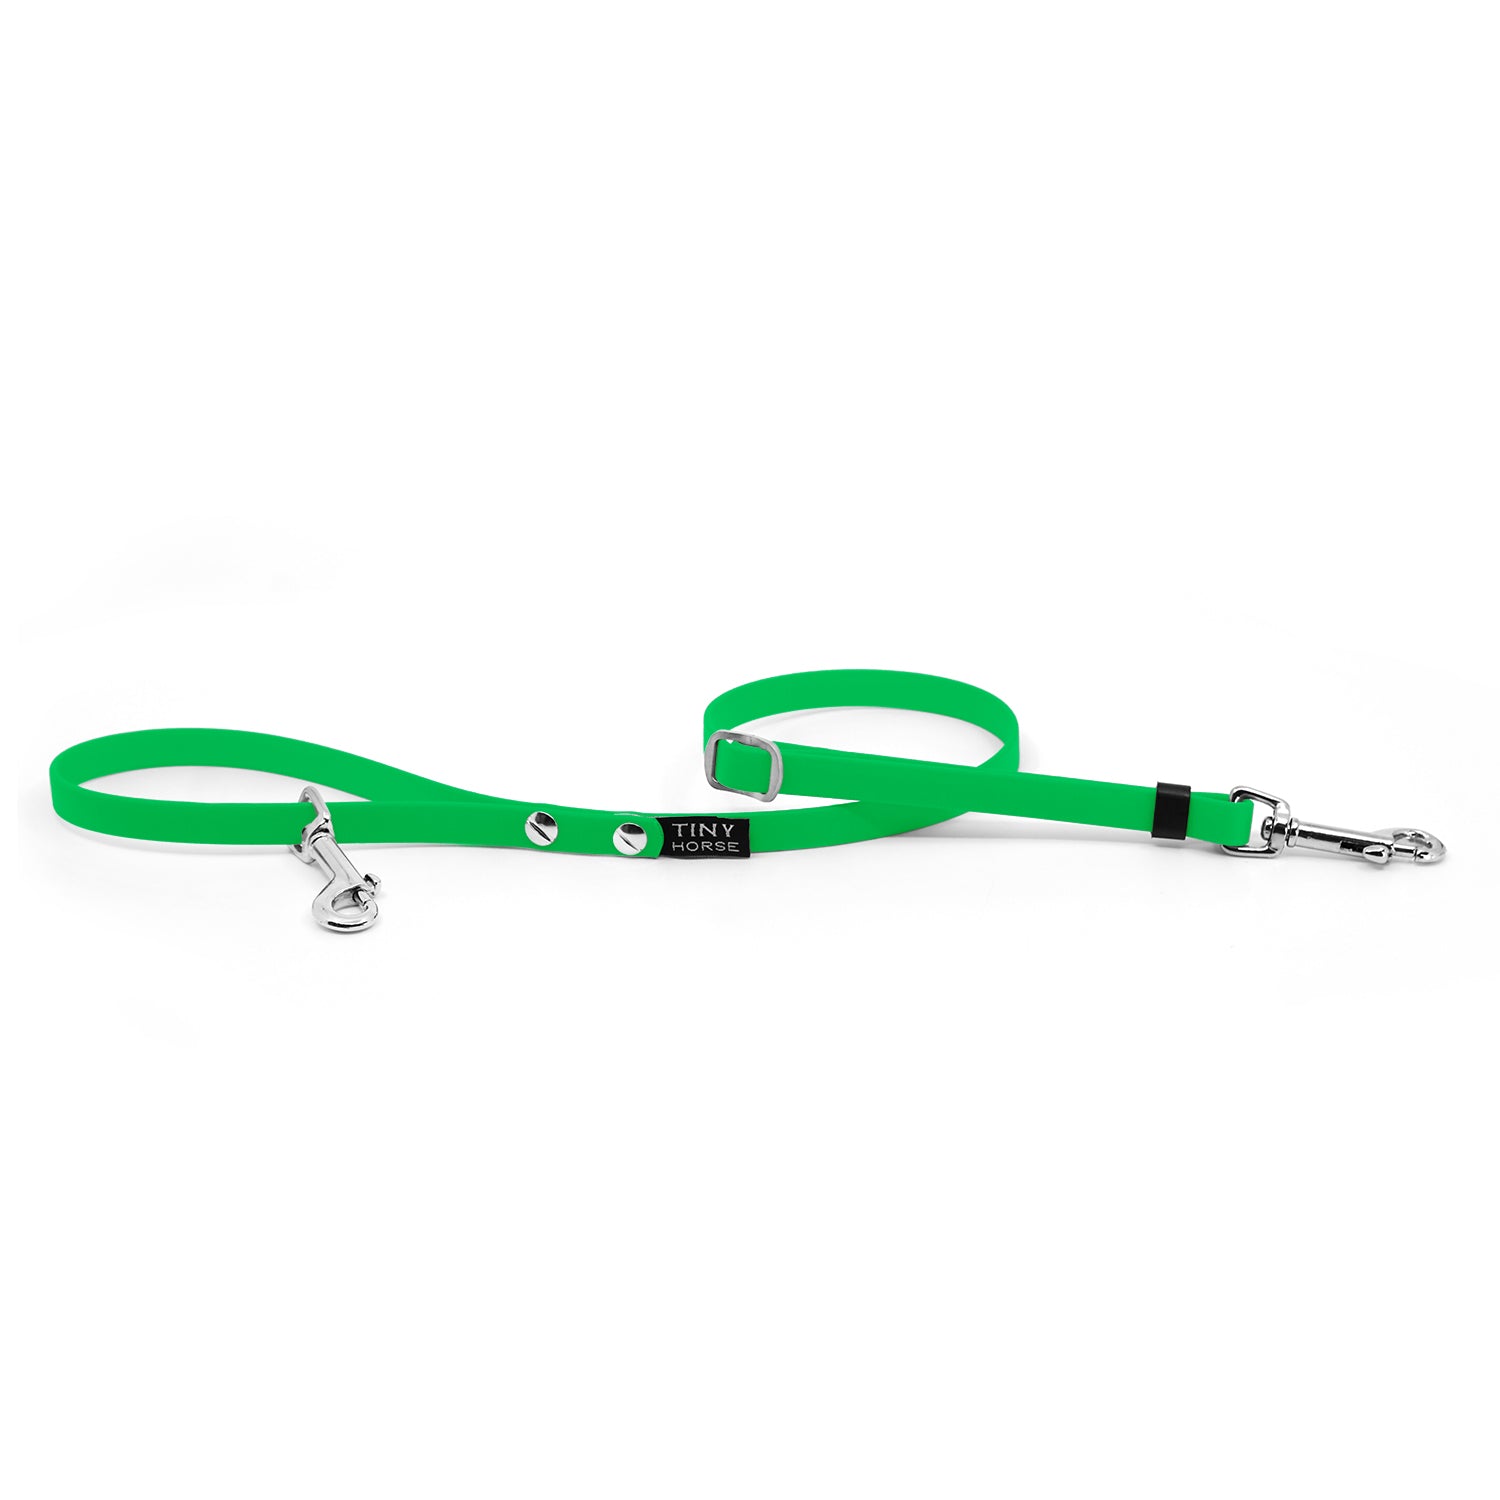 Neon green adjustable biothane leash for walking smaller dogs